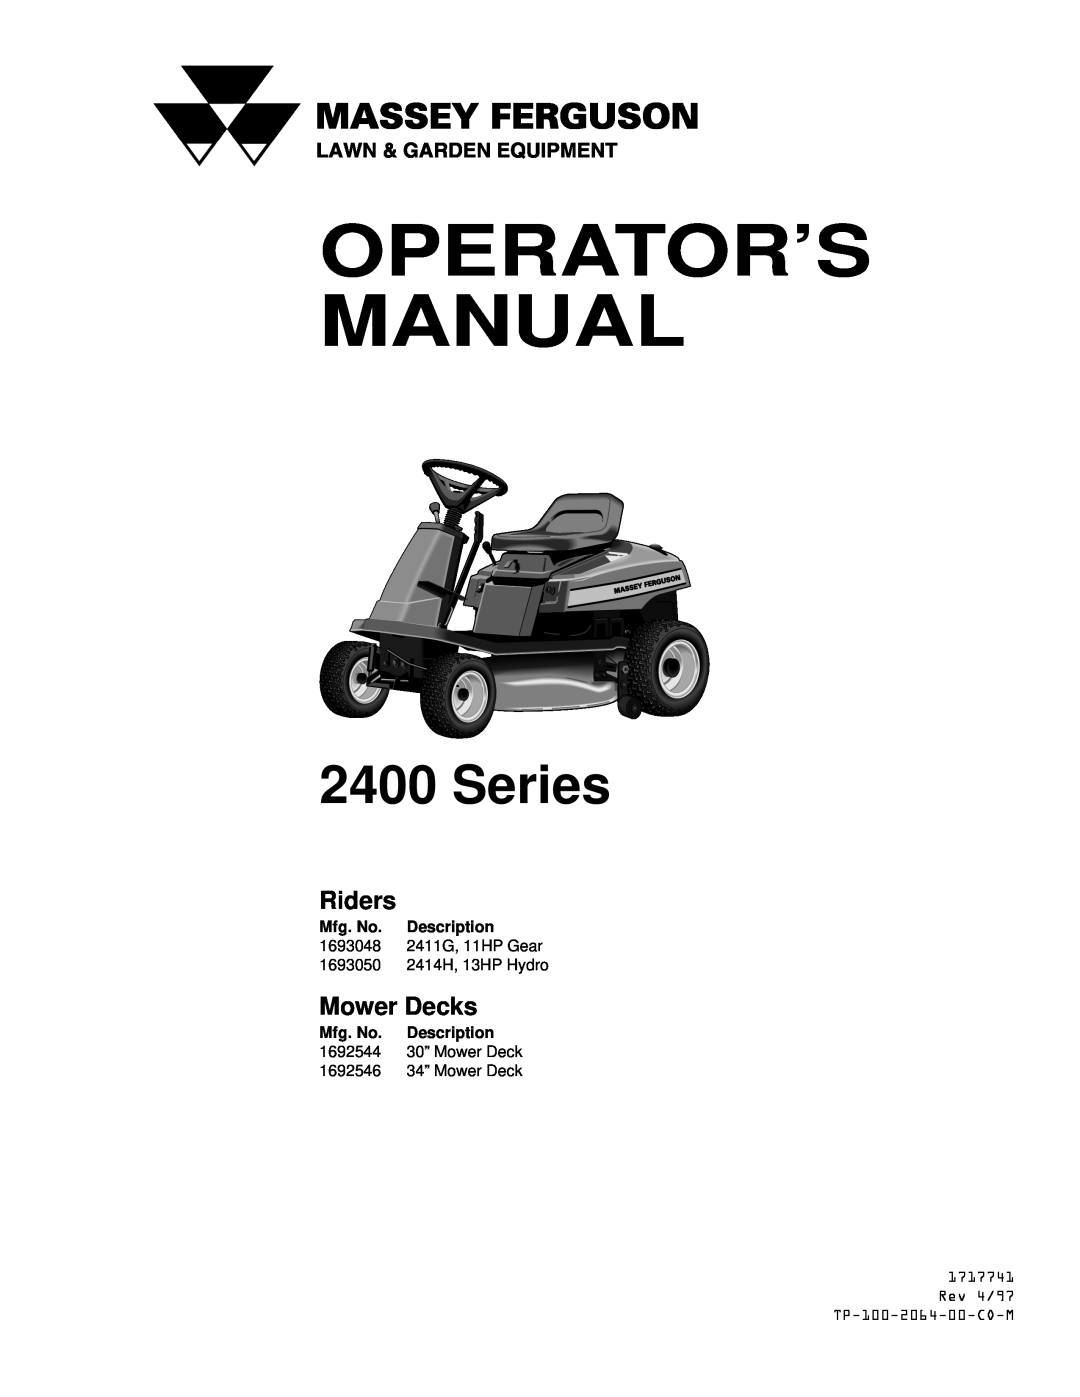 Simplicity 11HP, 14HP manual Series, Operator’S Manual, Riders, Mower Decks, Rev 4/97 TP-100-2064-00-CO-M 